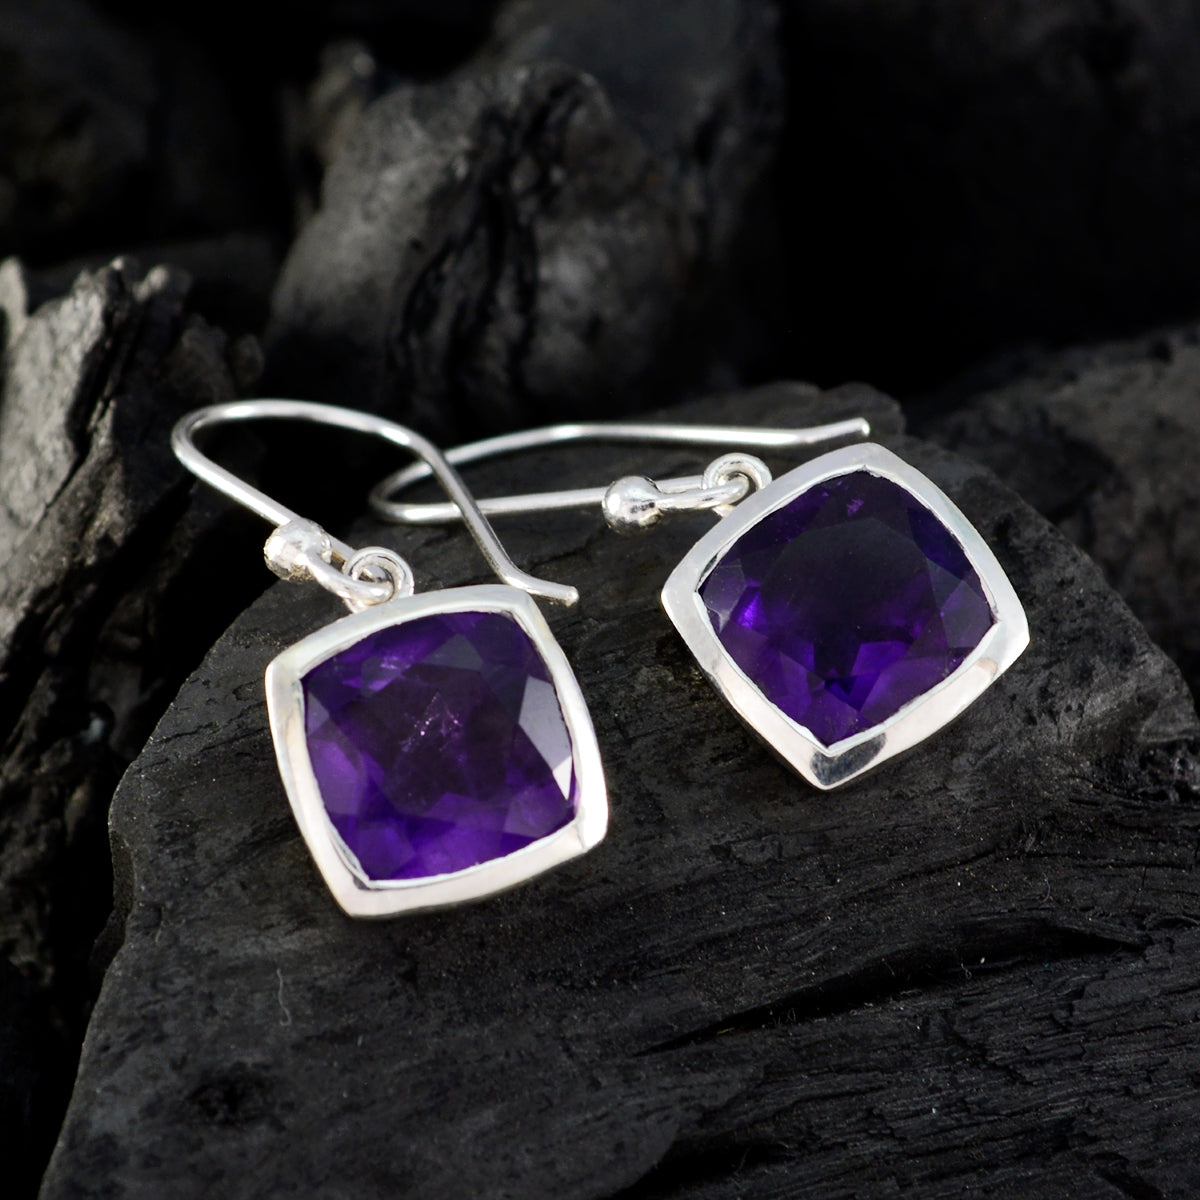 Riyo Real Gemstones Octogon Faceted Purple Amethyst Silver Earring wedding gift